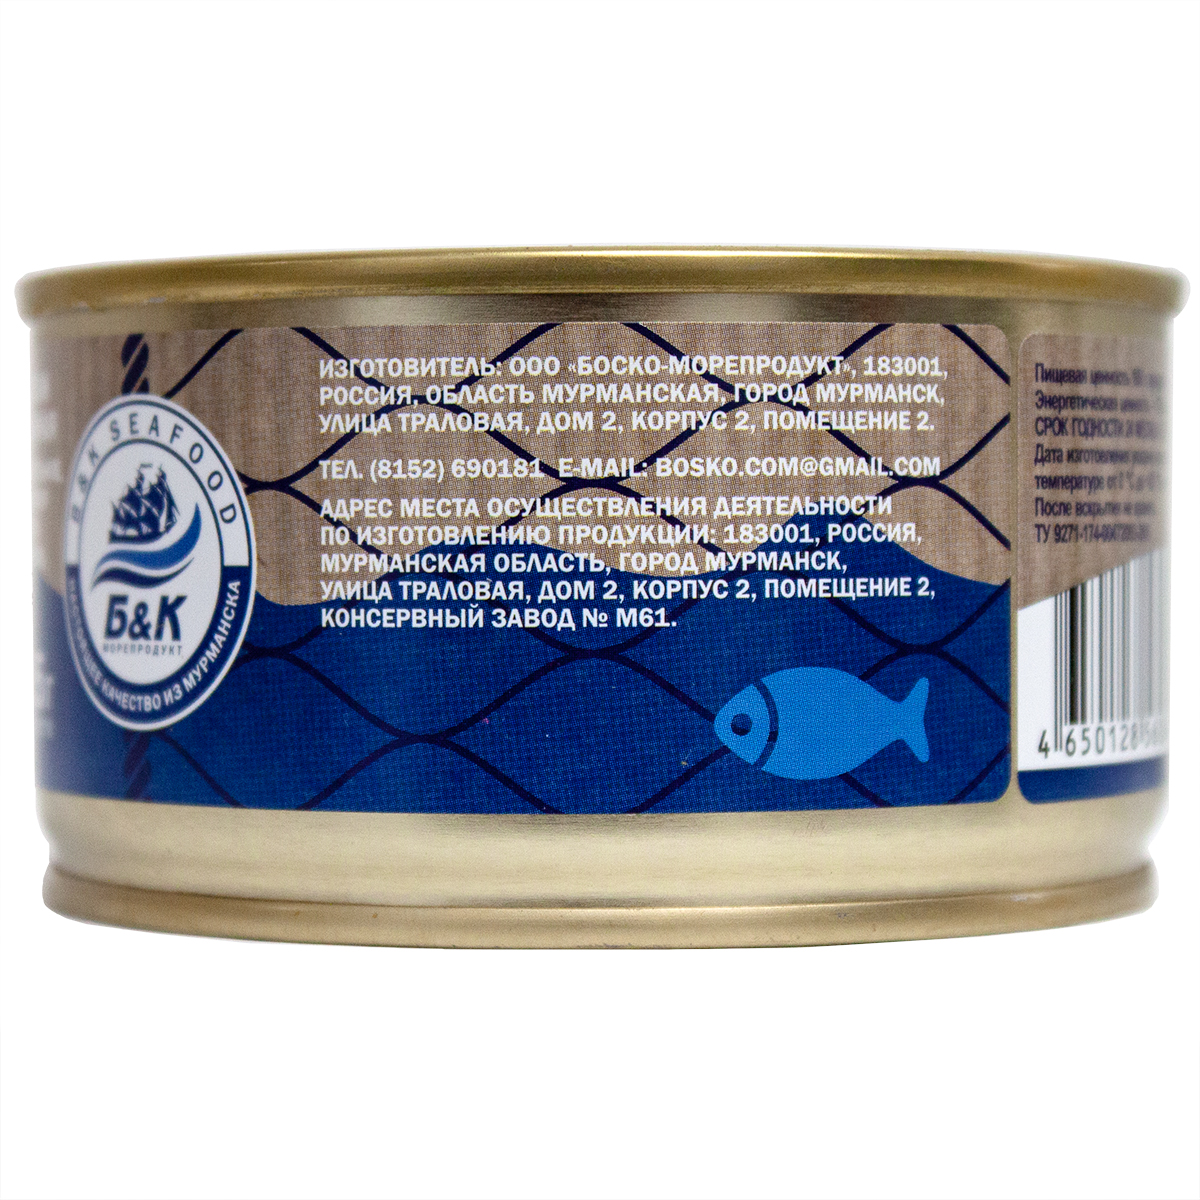   B&K Seafood , 185  ( &K Seafood .00617.00.00)